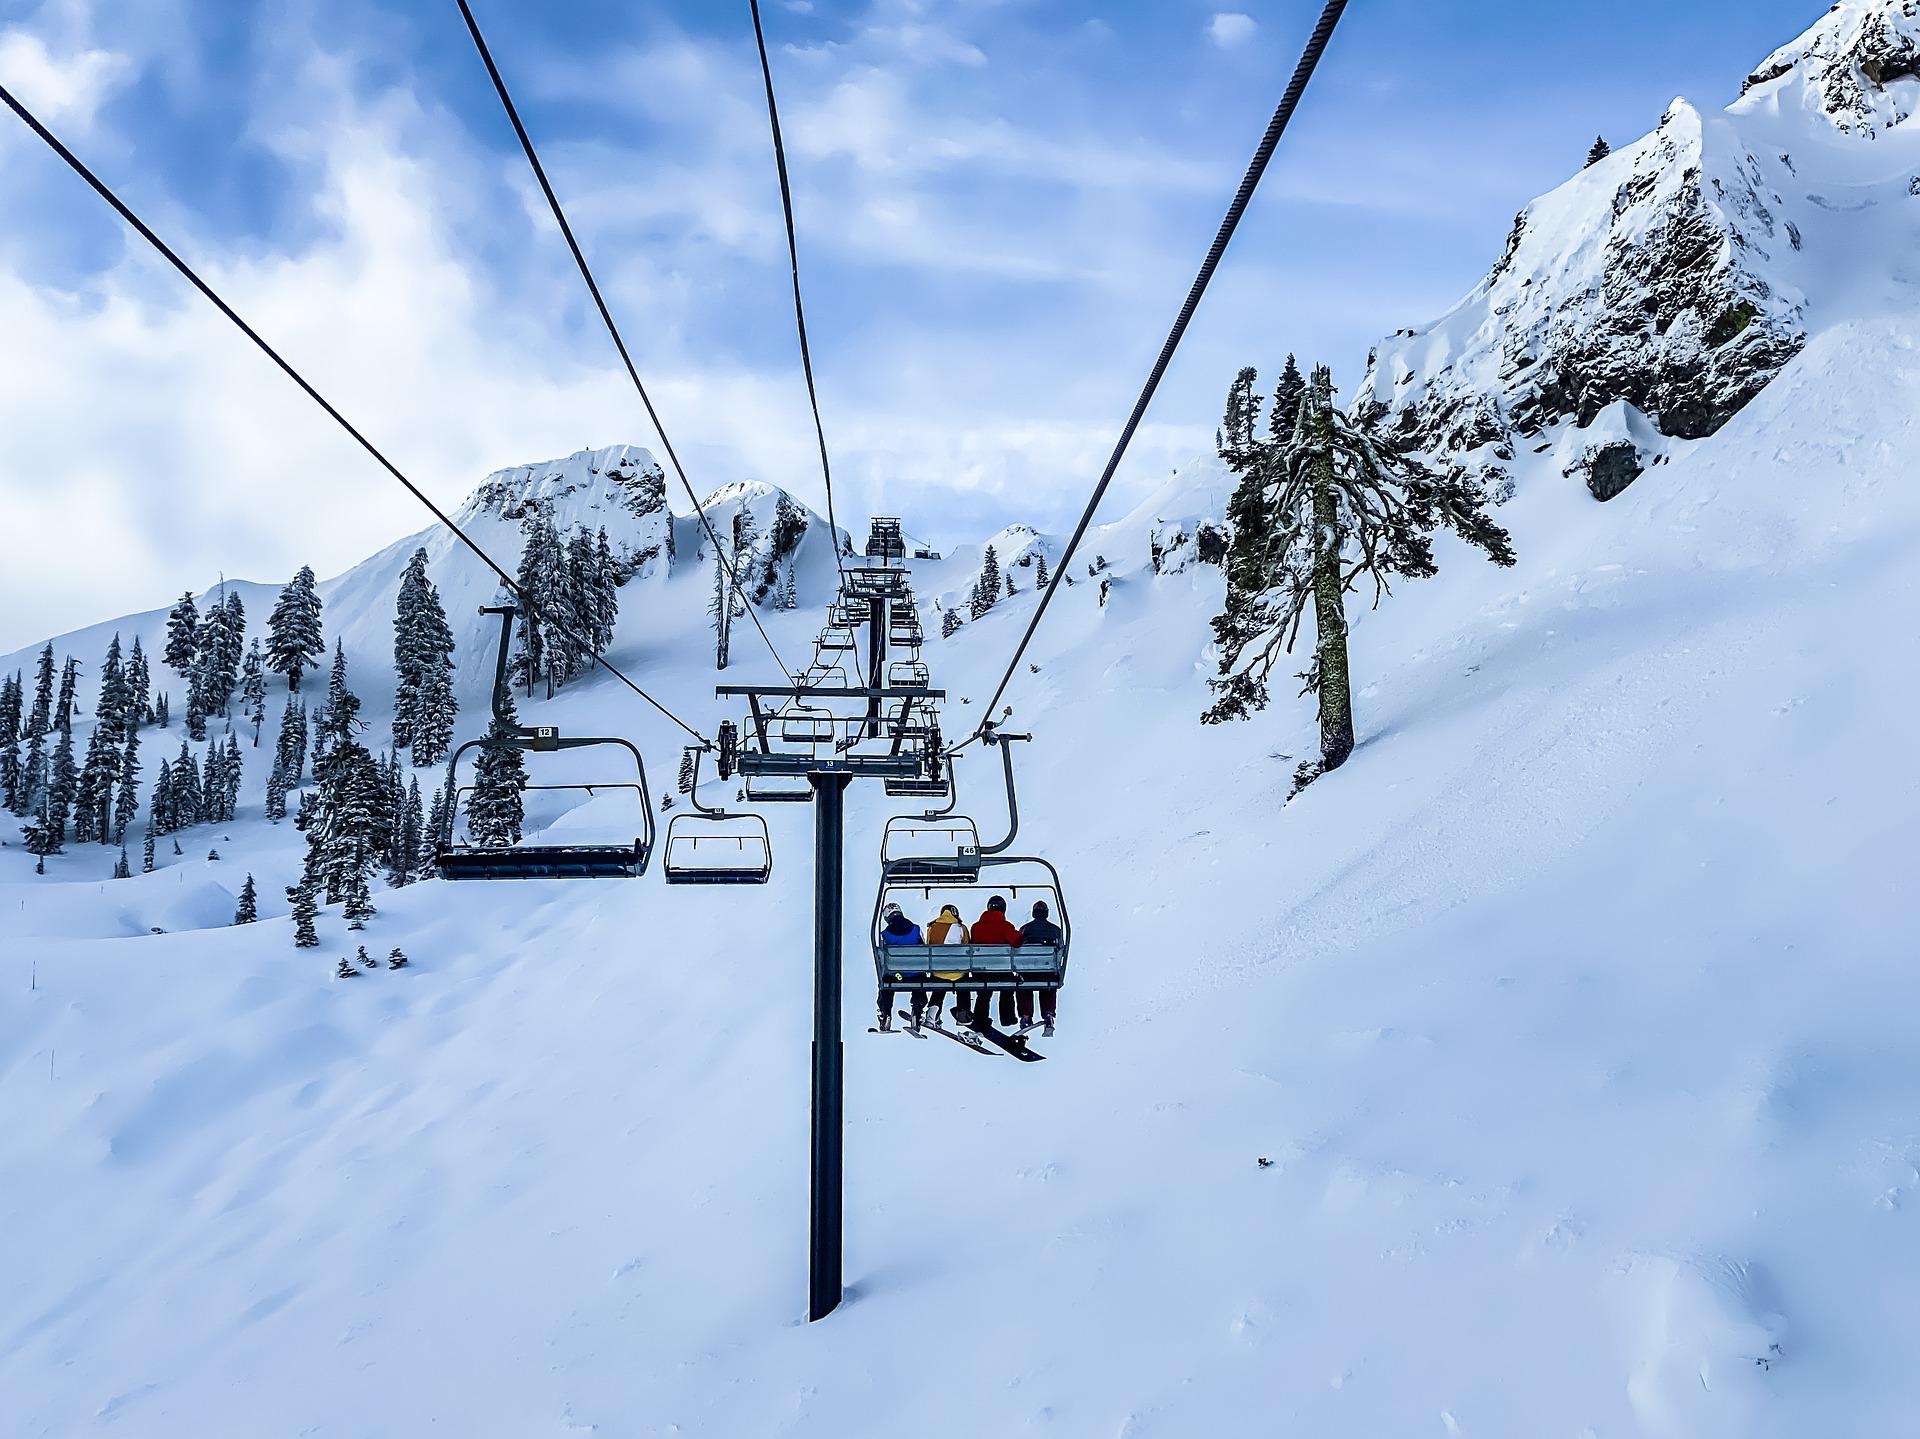 chari lift image showcasing Ski & snowboard season